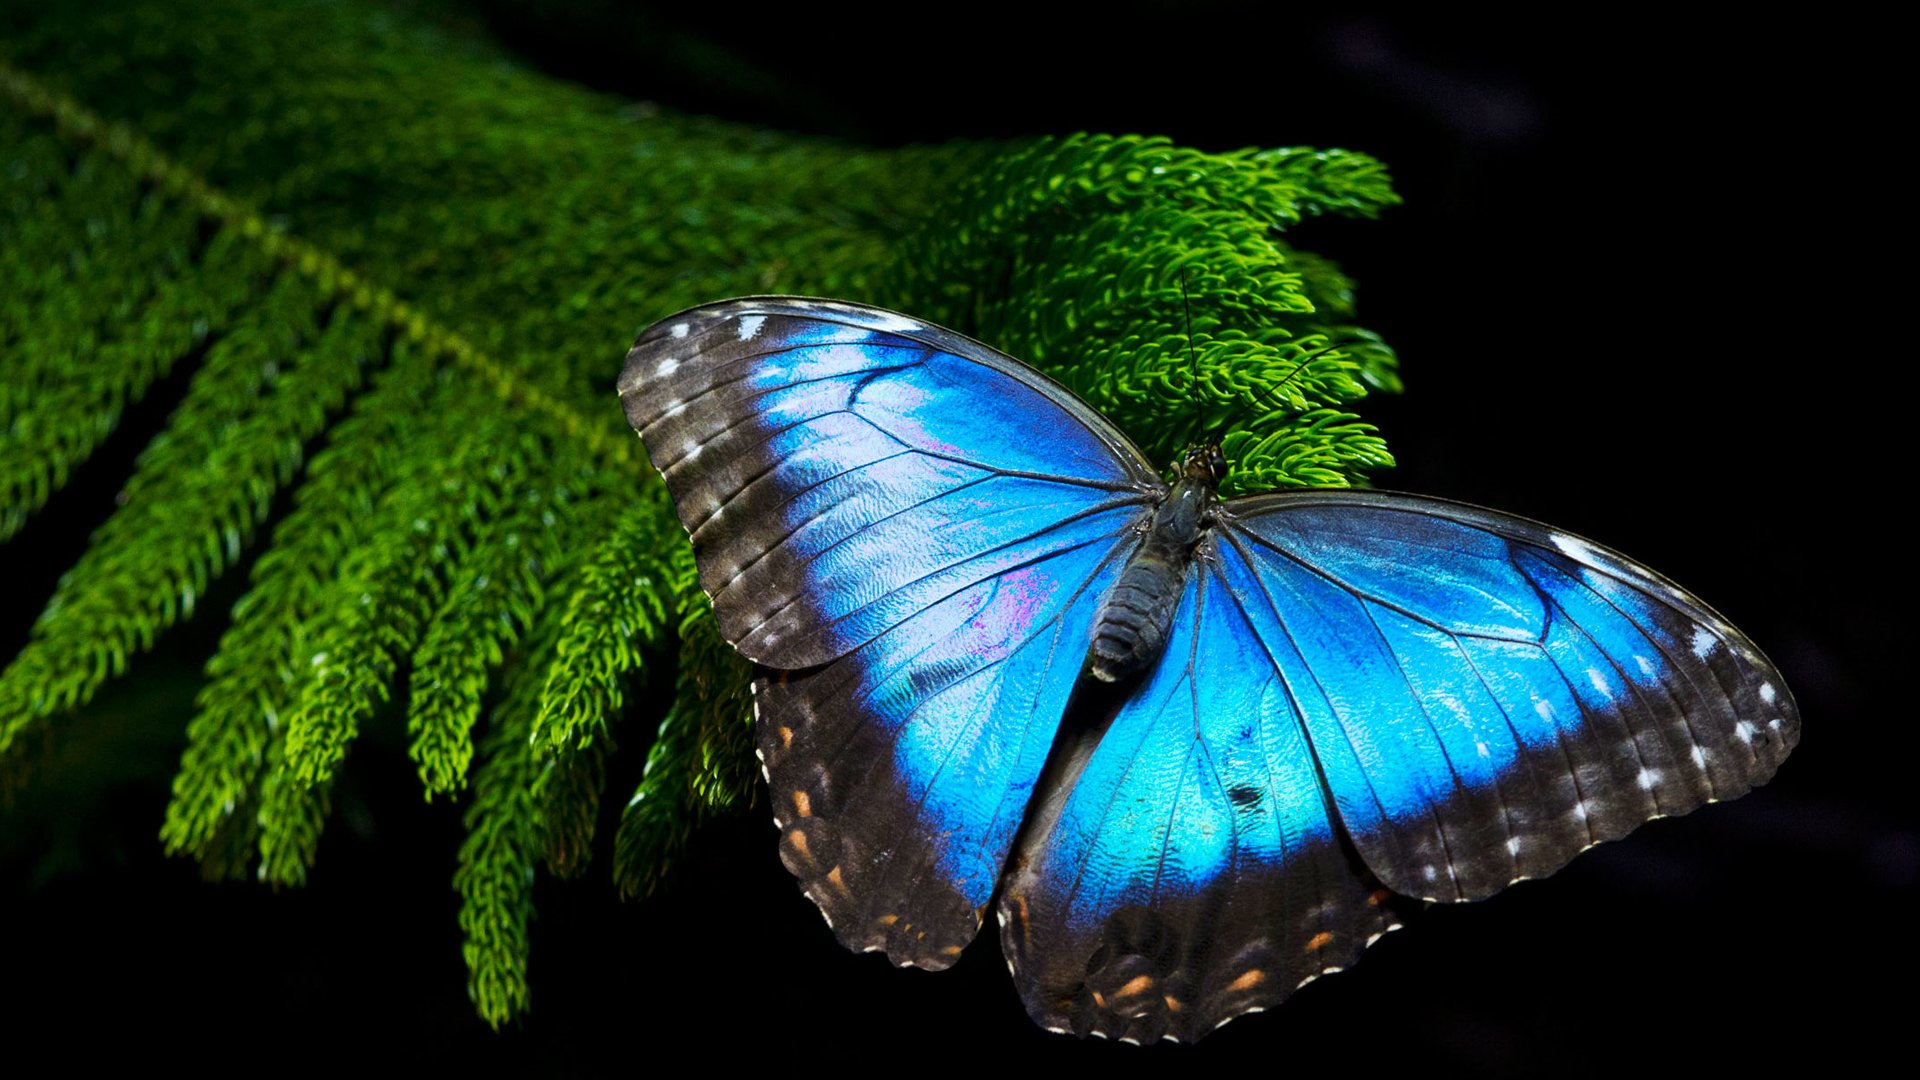 Morpho Butterfly Wallpaper for Desktop Background Wallpaper. Wallpaper Download. High Resolution Wallpaper